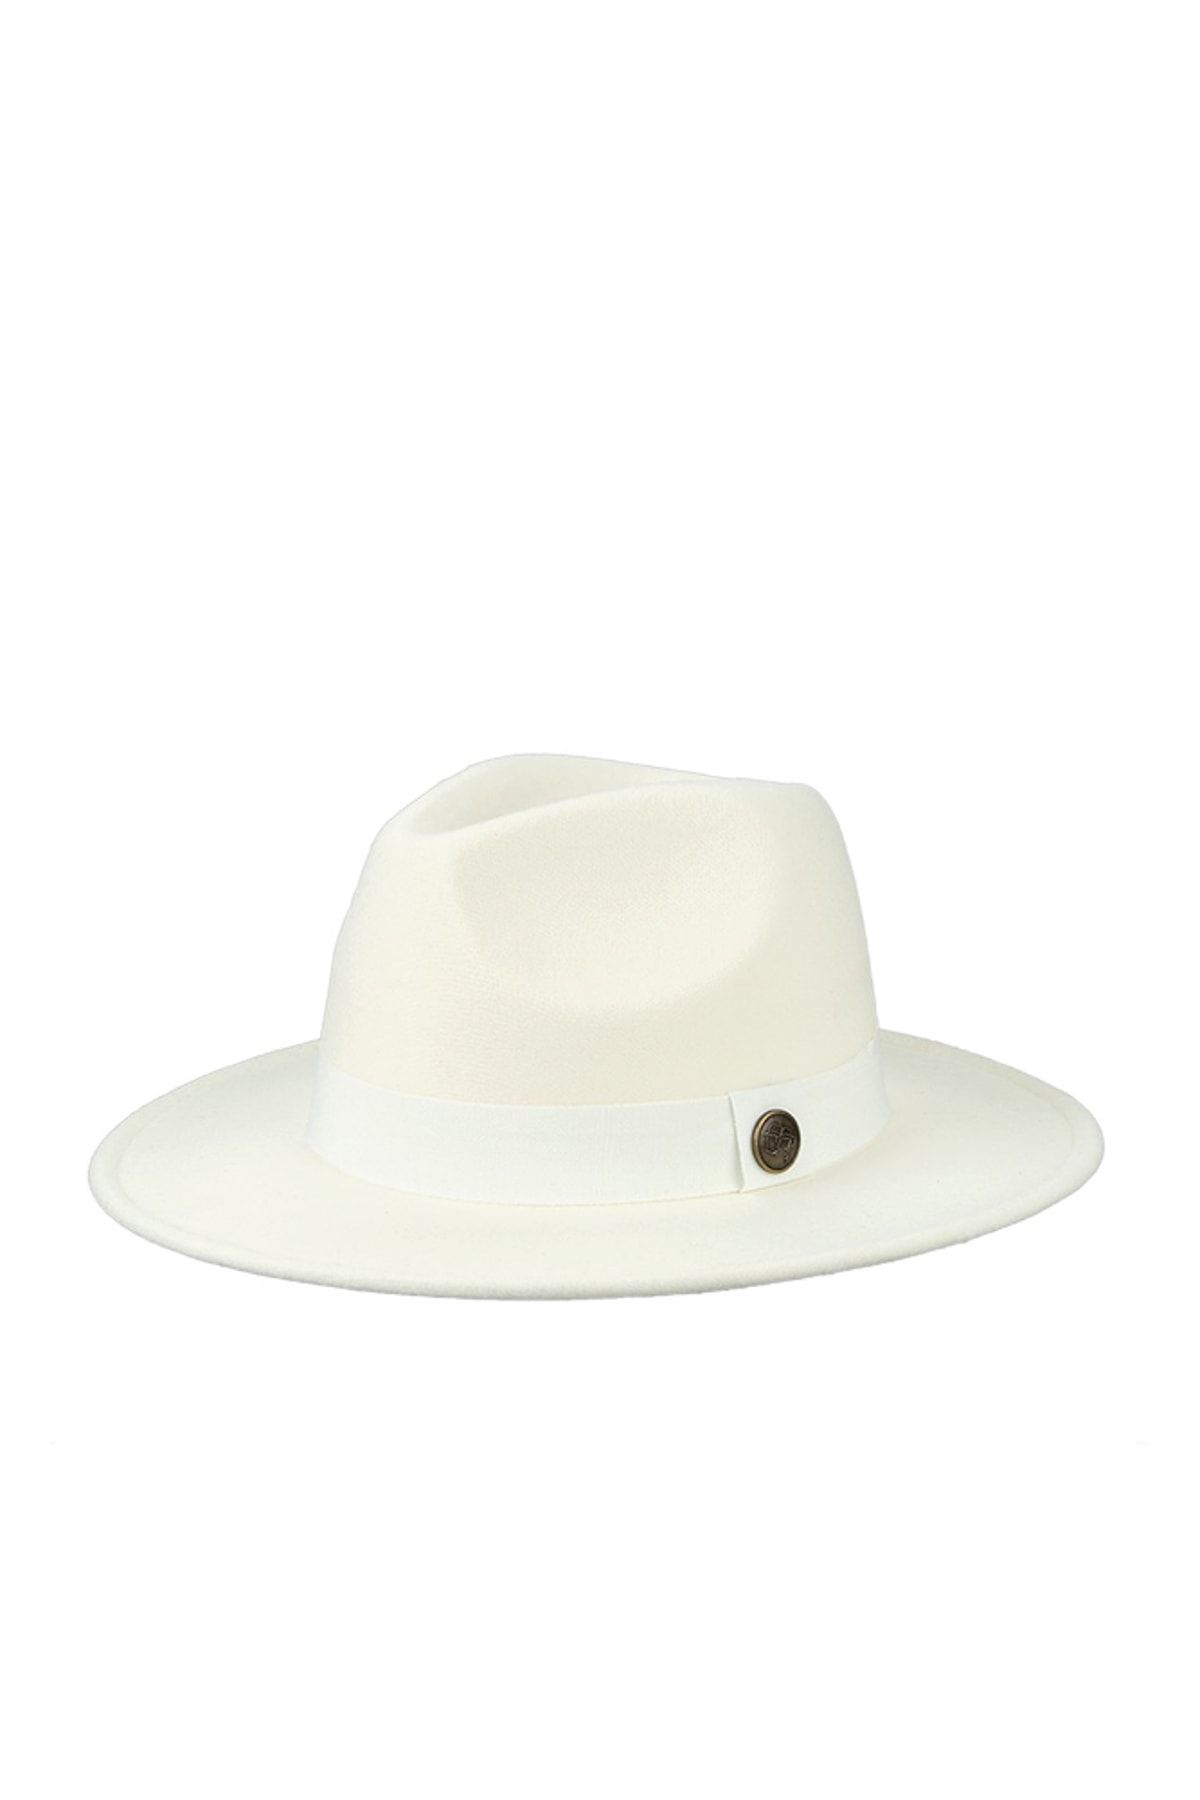 CosmoOutlet Beyaz Panama Fedora Fötr Klasik Şapka